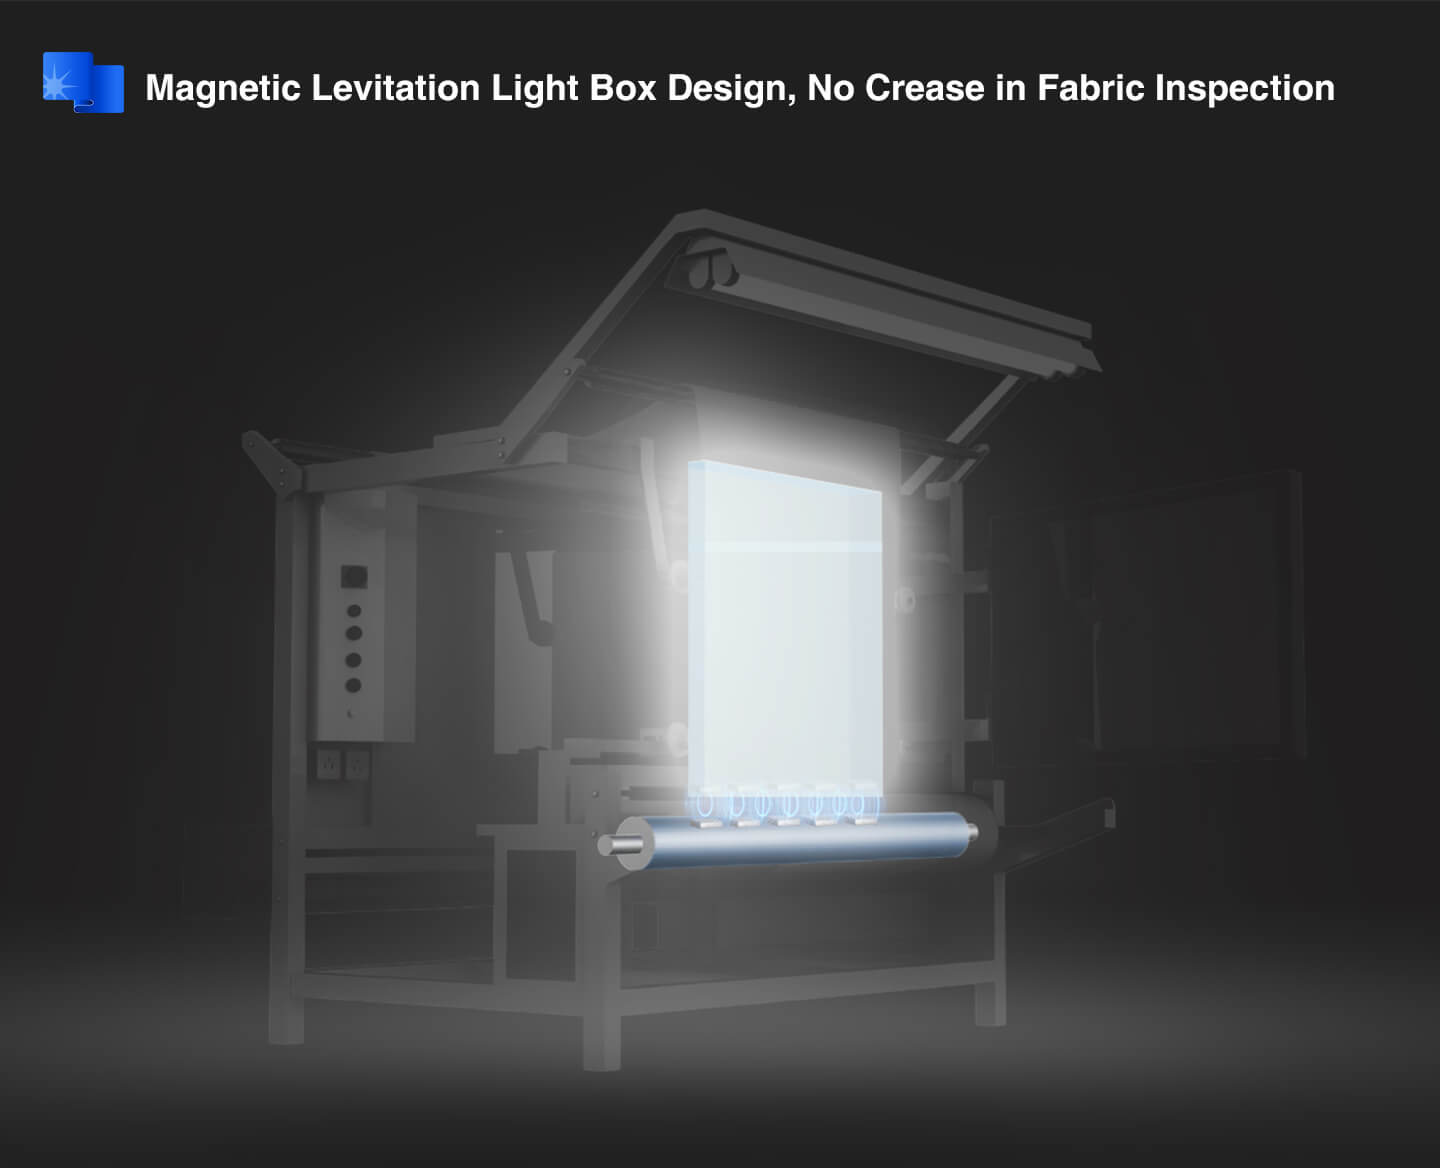 Tubular Fabric Inspection Machine with magnetic levitation light box design